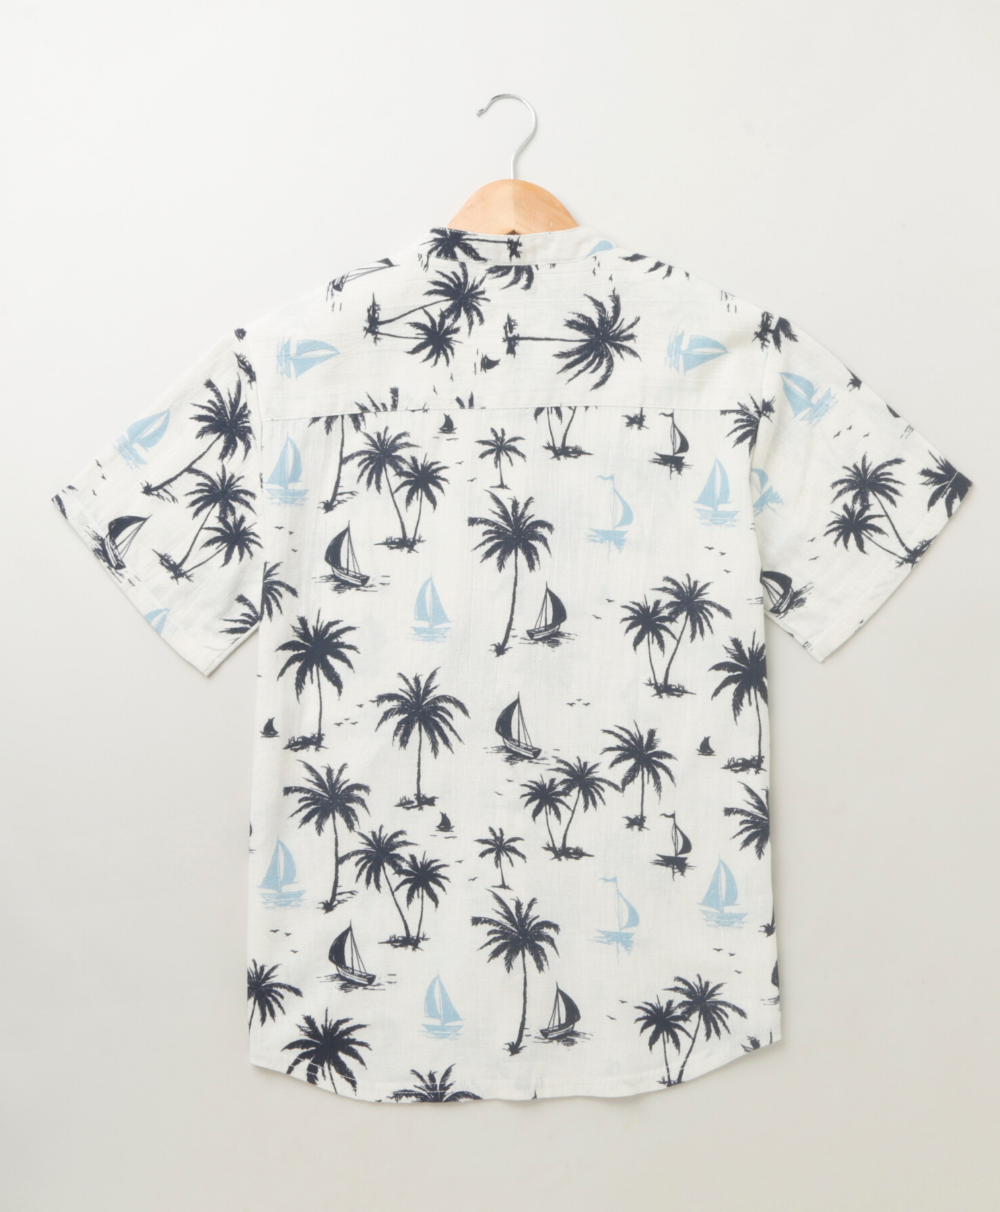 Sail Boat and Palm Tree Print Cotton Shirt